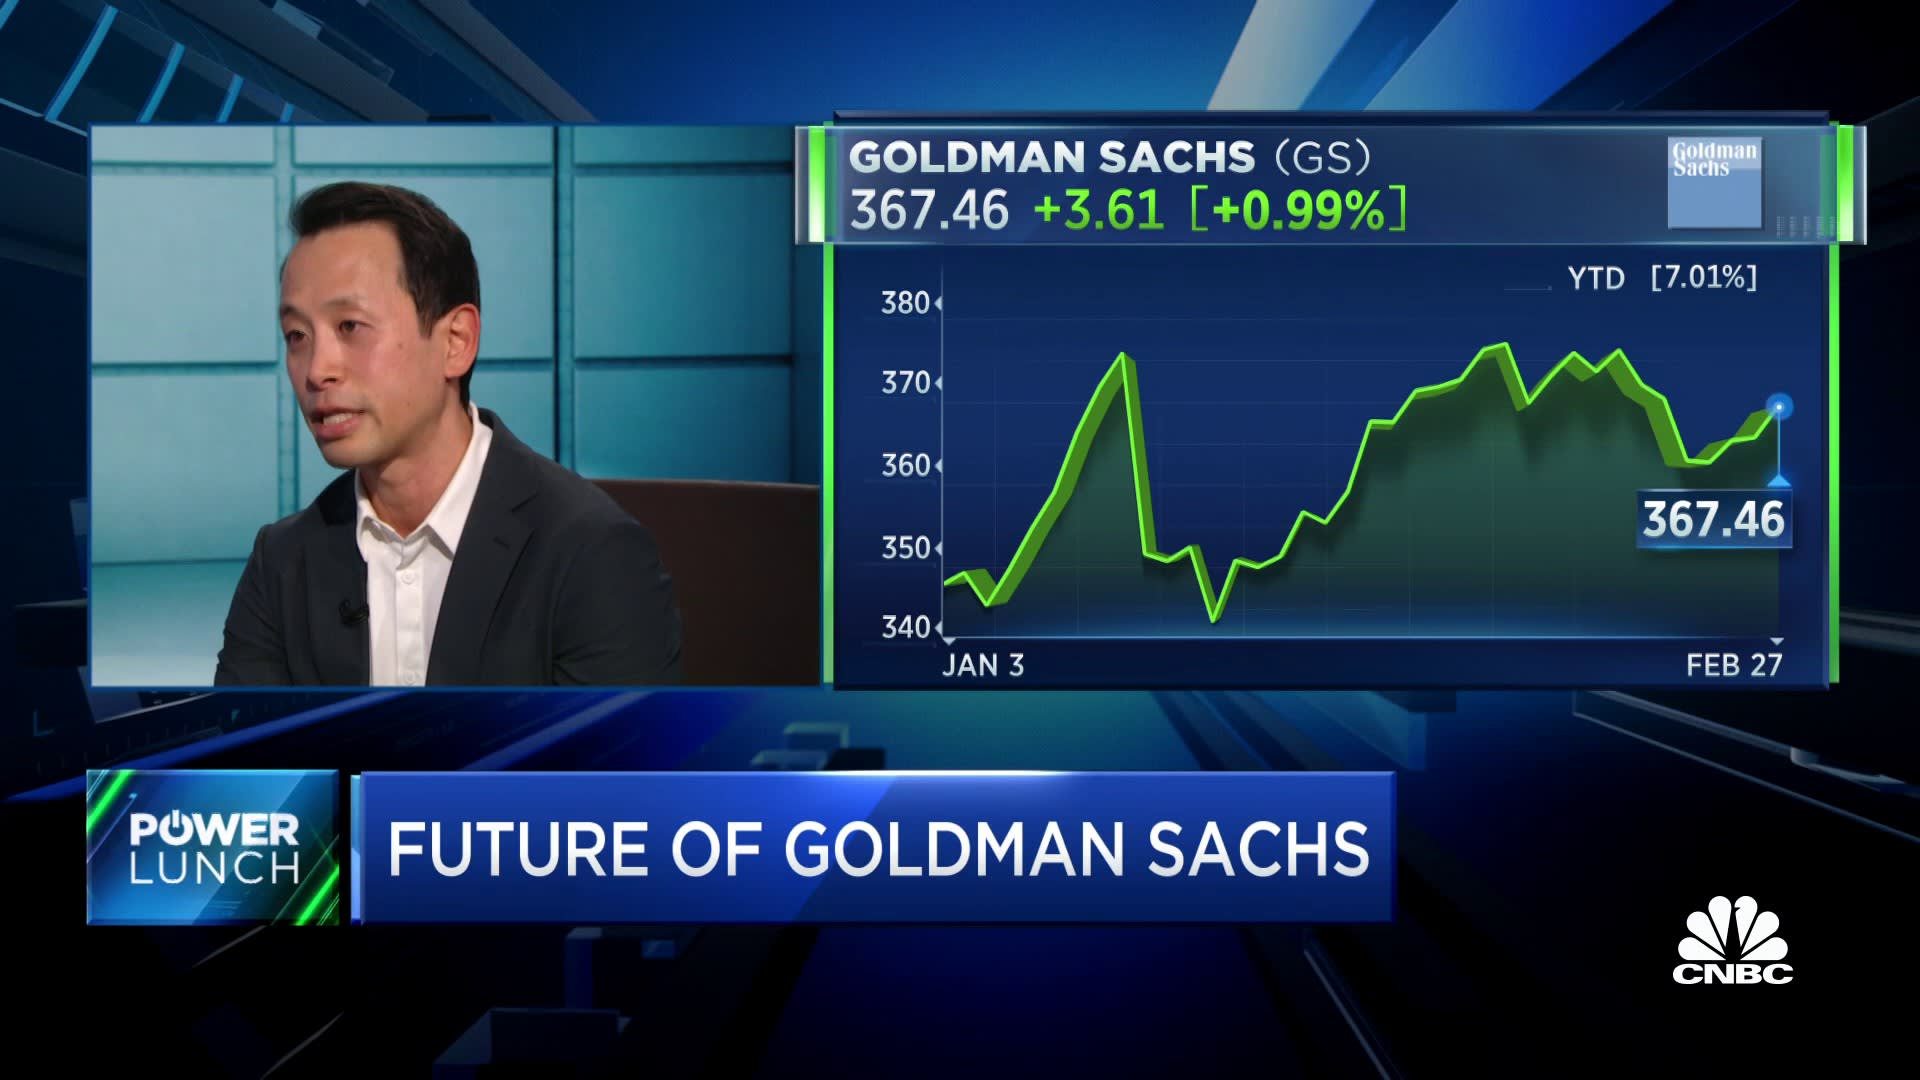 Goldman Sachs prepares for investor day as concerns mount over CEO David Solomon